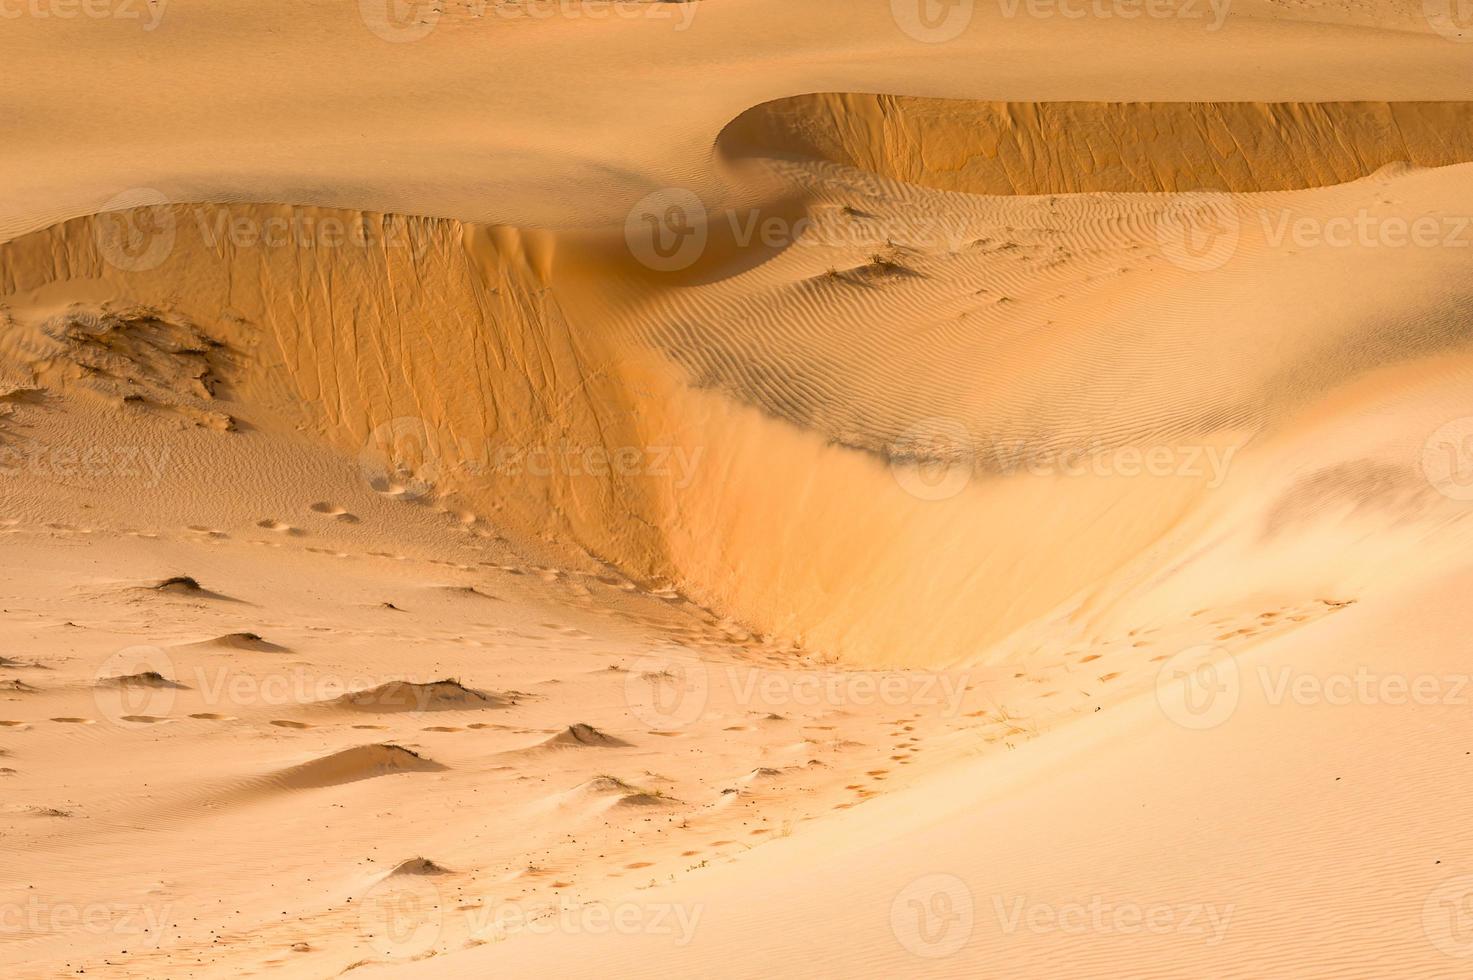 deserto do Saara foto